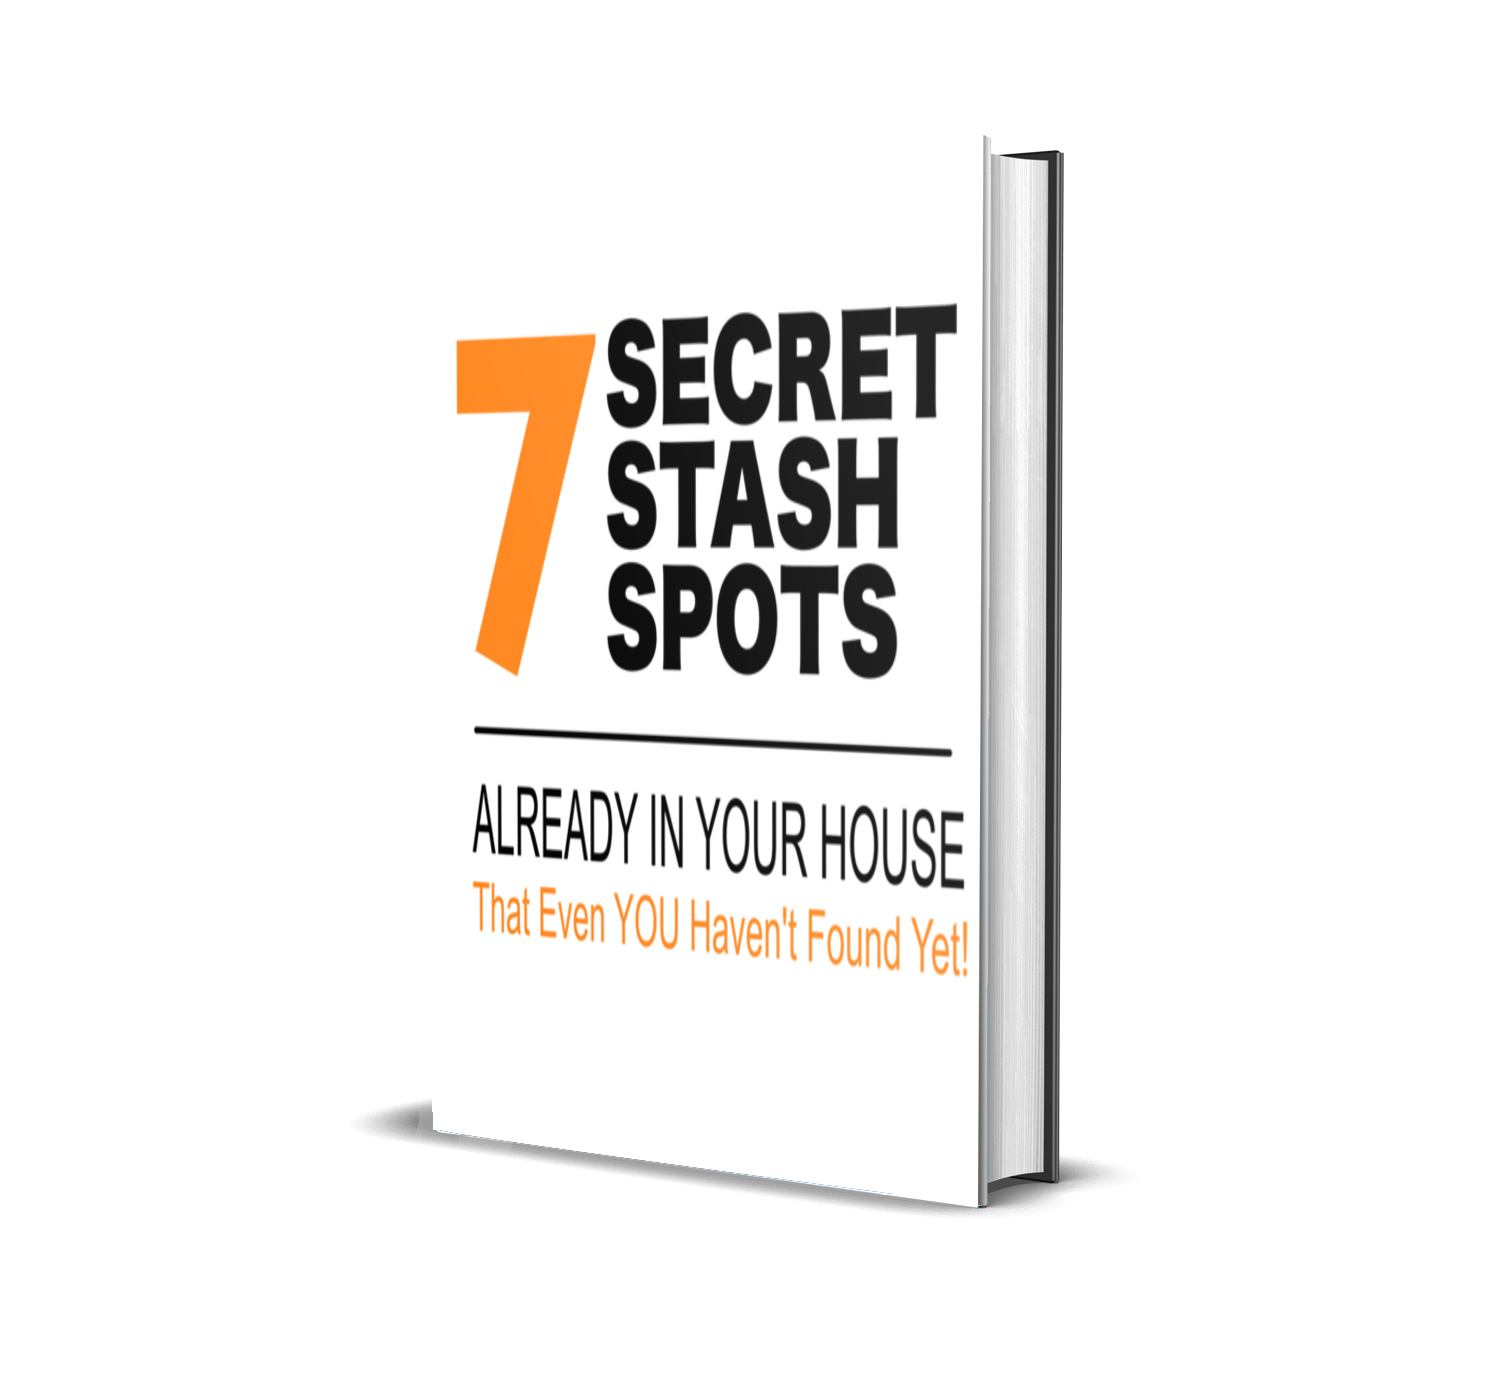 7 Secret Stash Spots